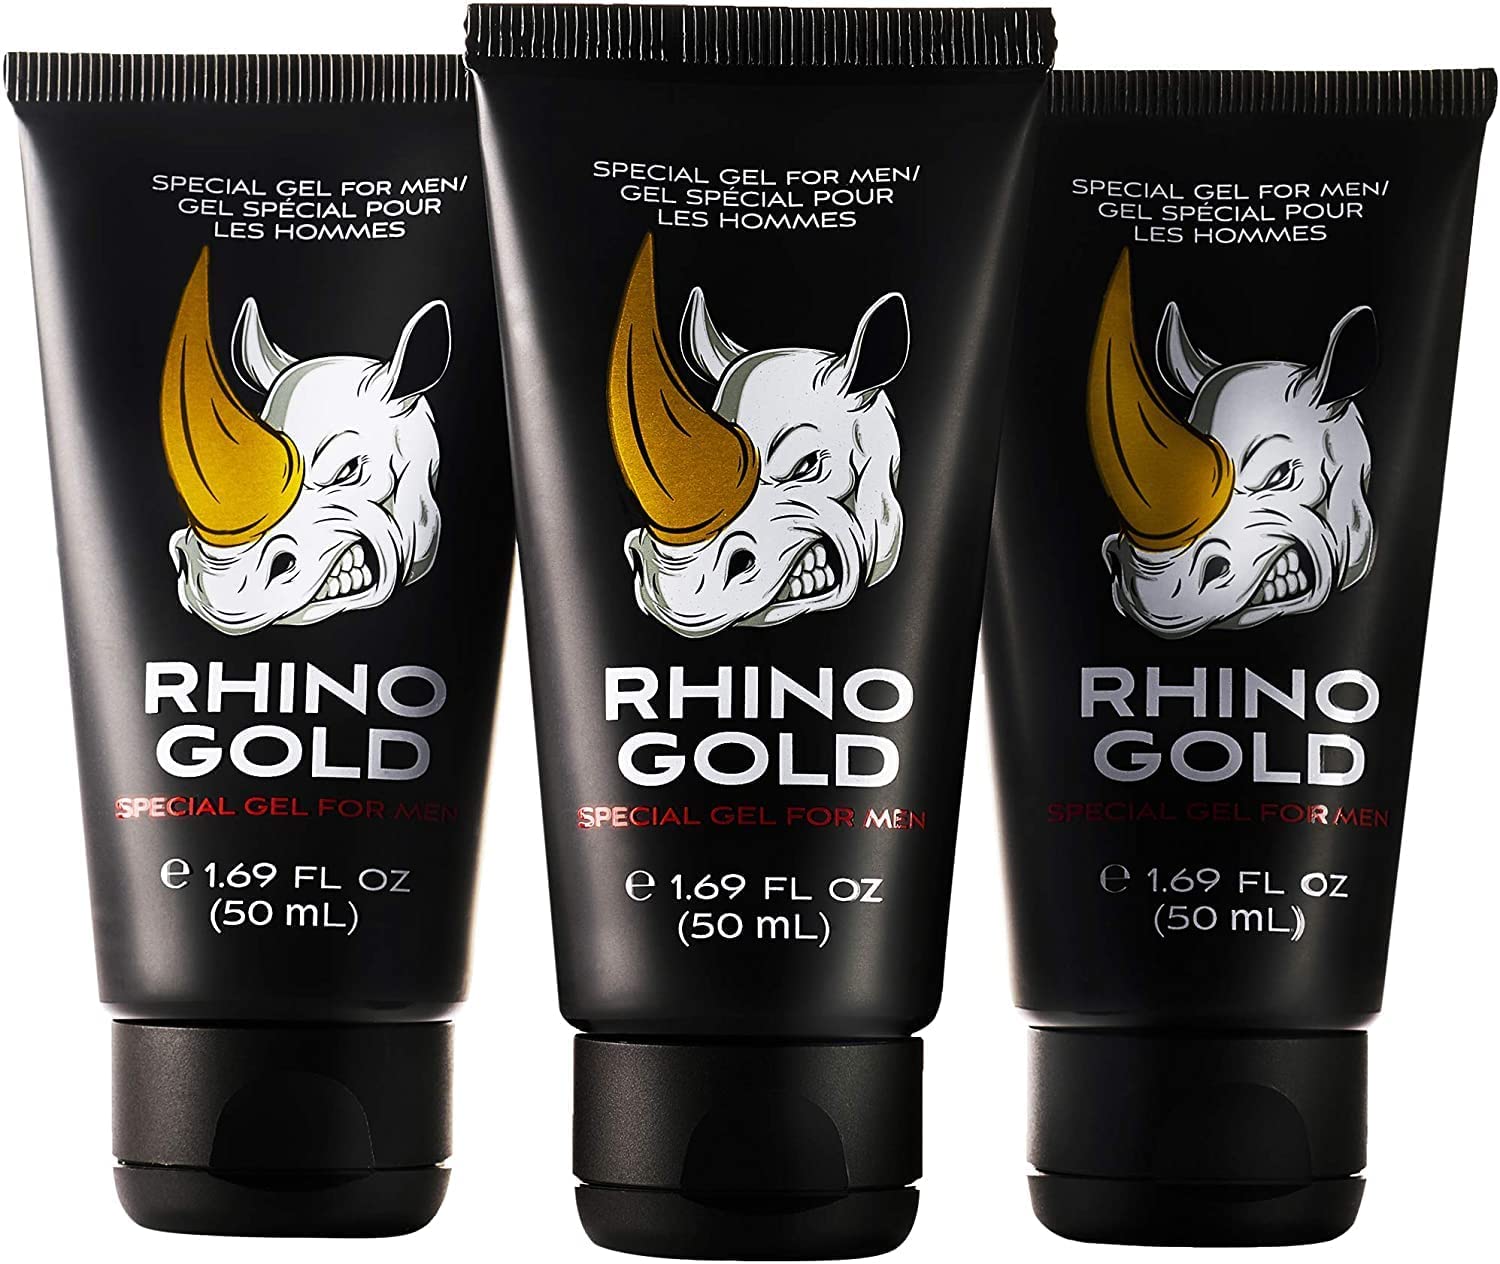 Rhino Gold Gel funziona